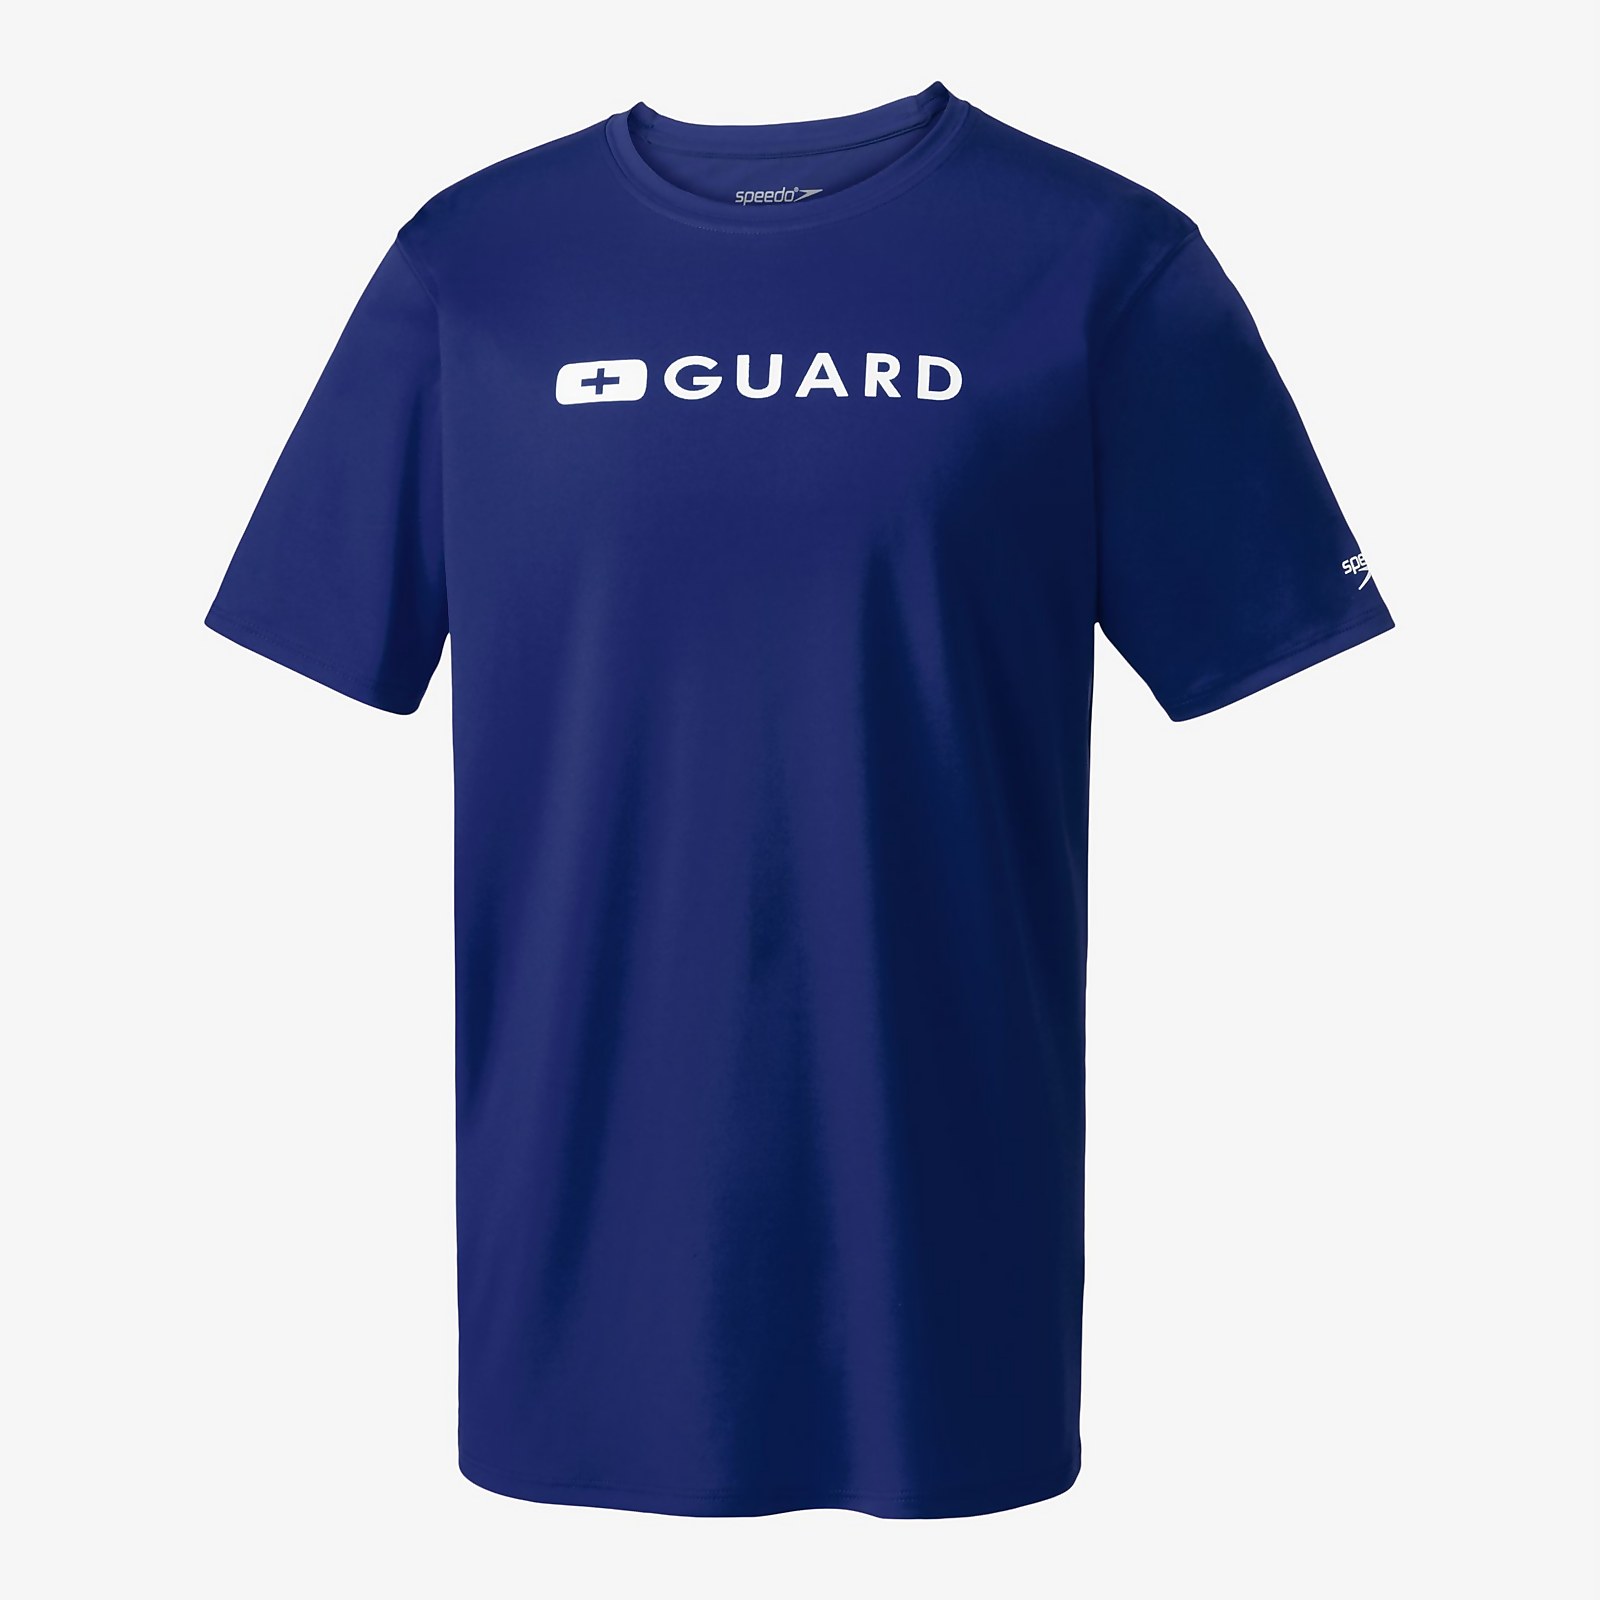 Speedo  Guard New Easy Short Sleeve Tee - L    : Navy